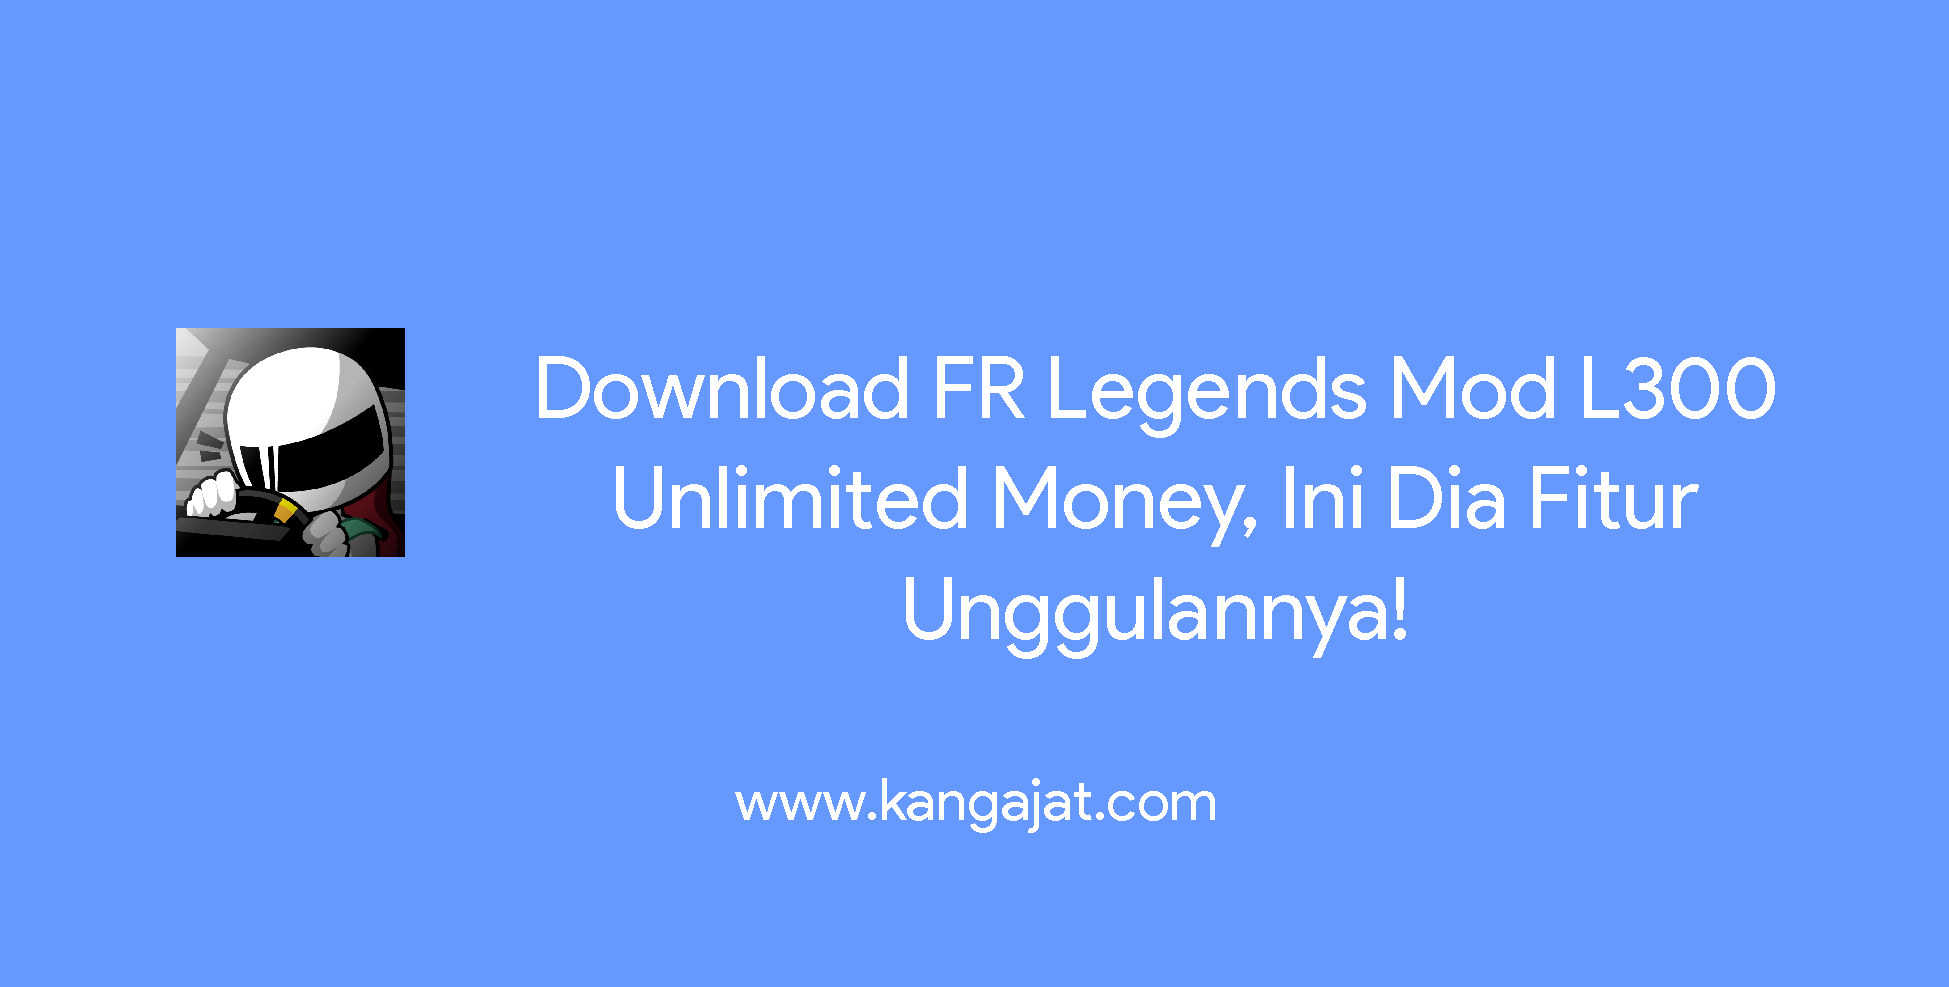 Download Fr Legends Mod L300 Unlimited Money. Download FR Legends Mod L300 Unlimited Money, Simak Fitur